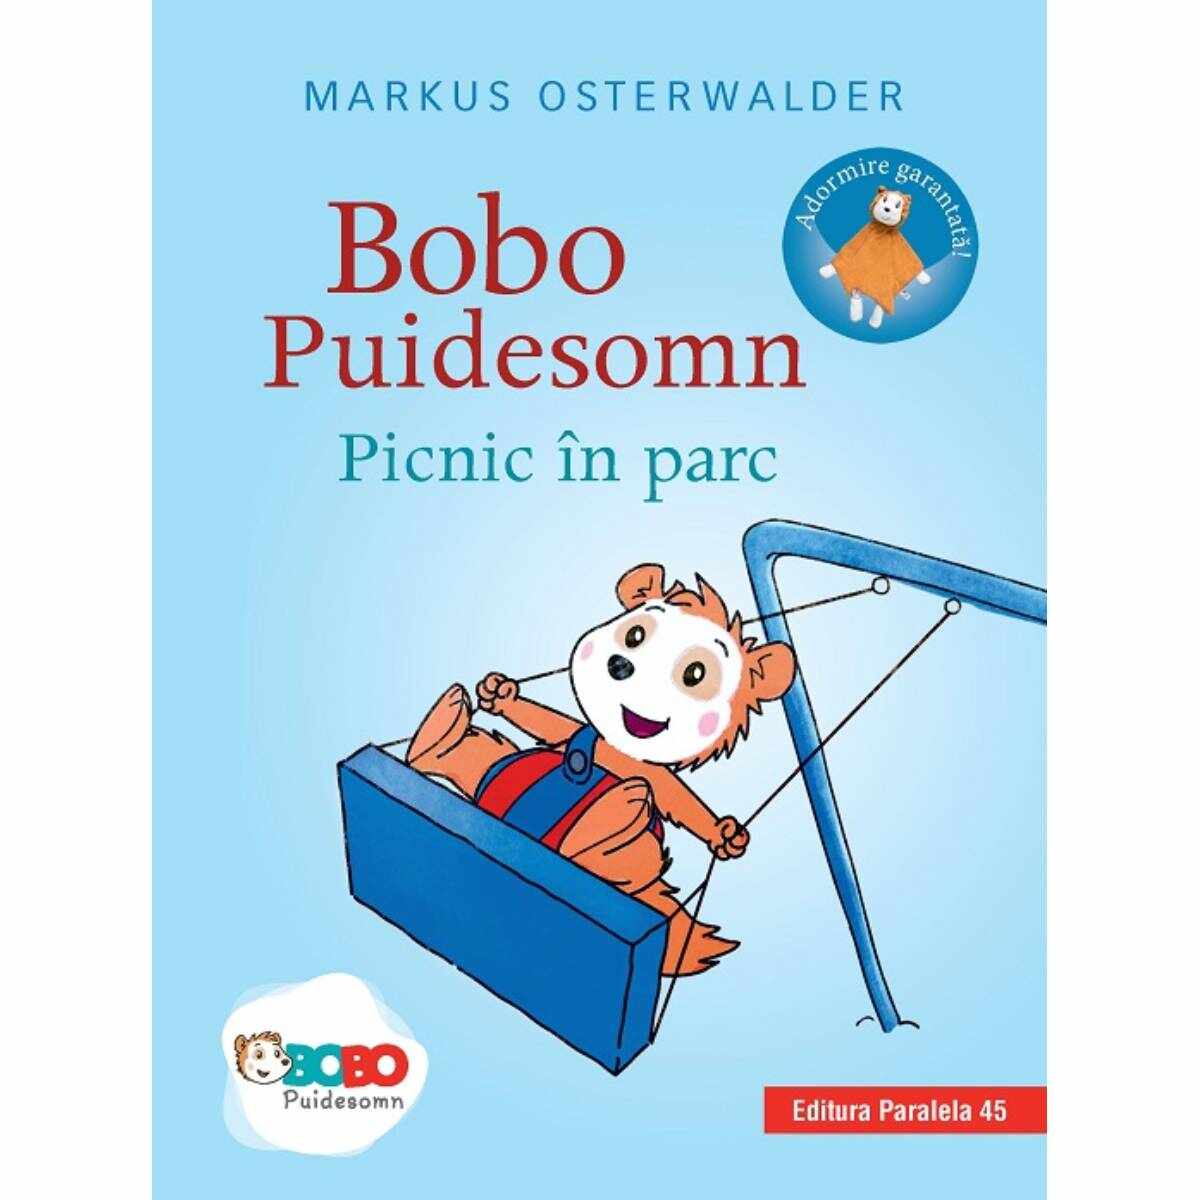 Bobo Puidesomn - Picnic in parc, Markus Osterwalder